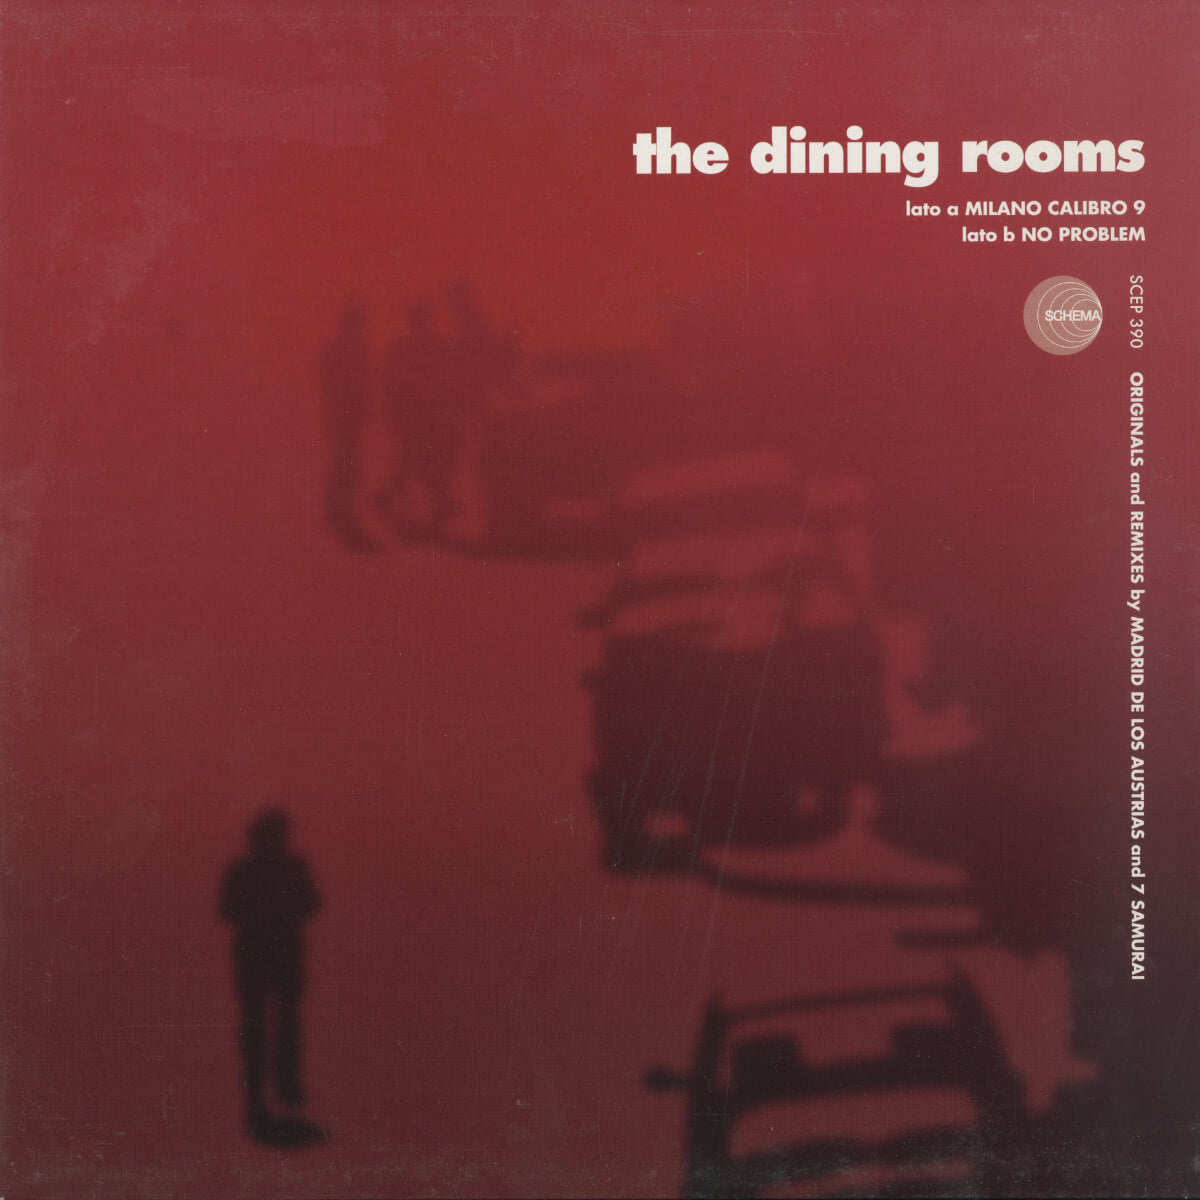 The Dining Rooms – Milano Calibro 9 / No Problem